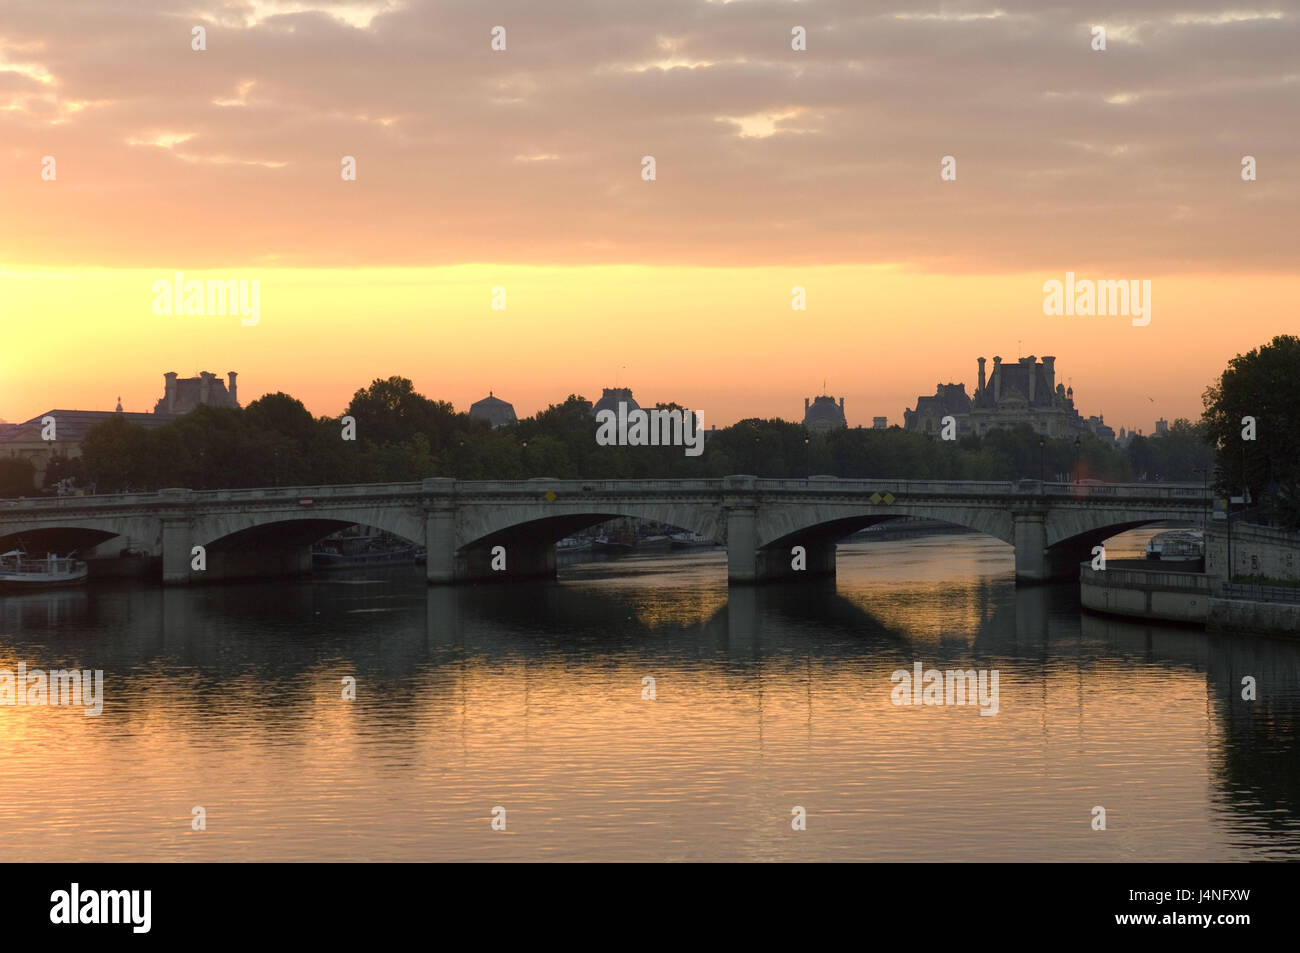 France, Paris, his, Pont de la Concorde, morning tuning, Stock Photo